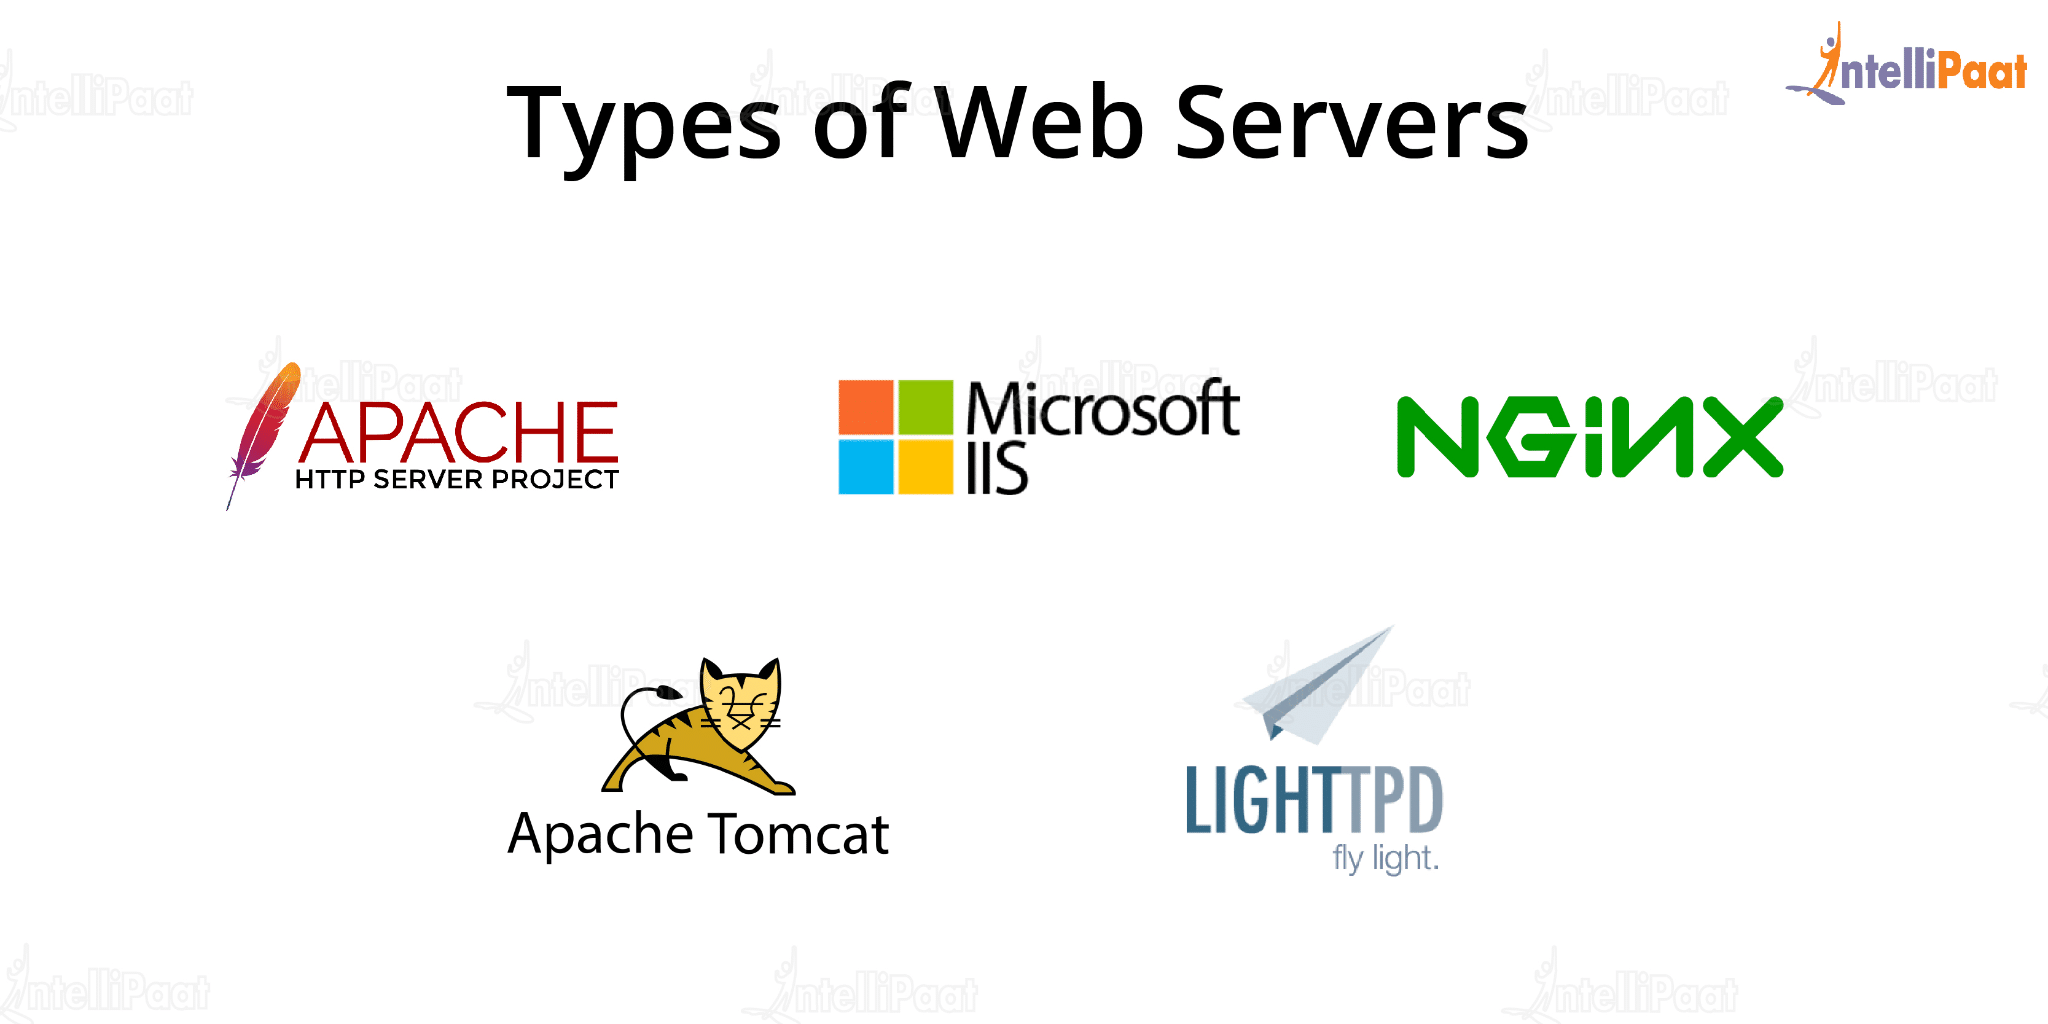 Types of Web Servers